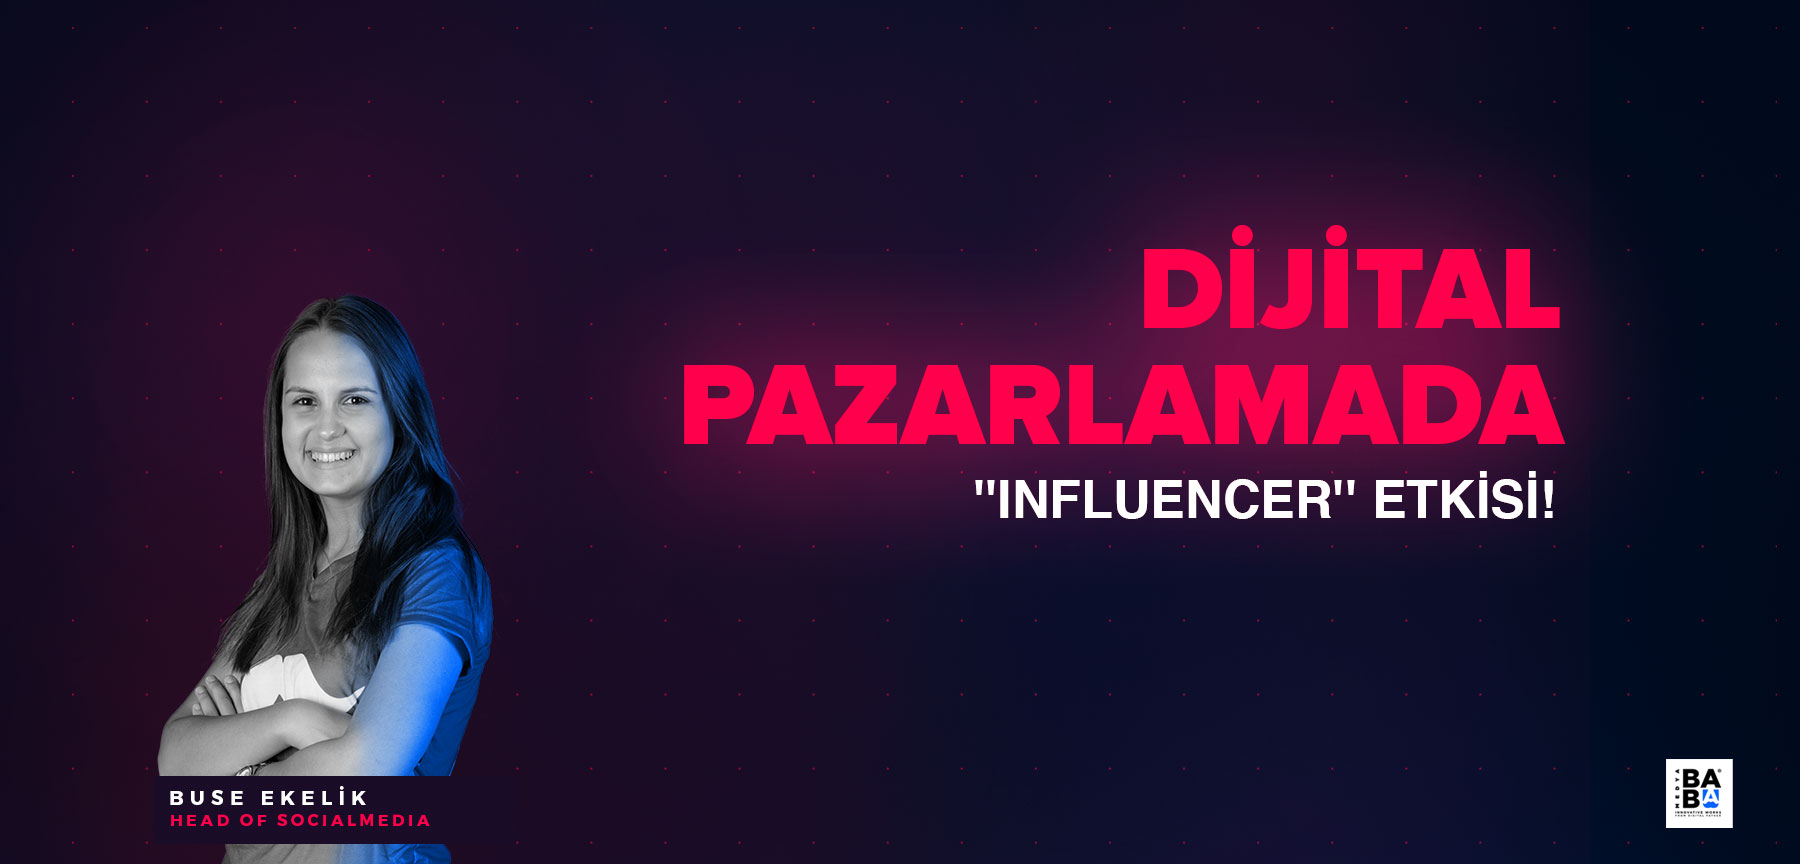 DİJİTAL PAZARLAMADA ''INFLUENCER'' ETKİSİ!